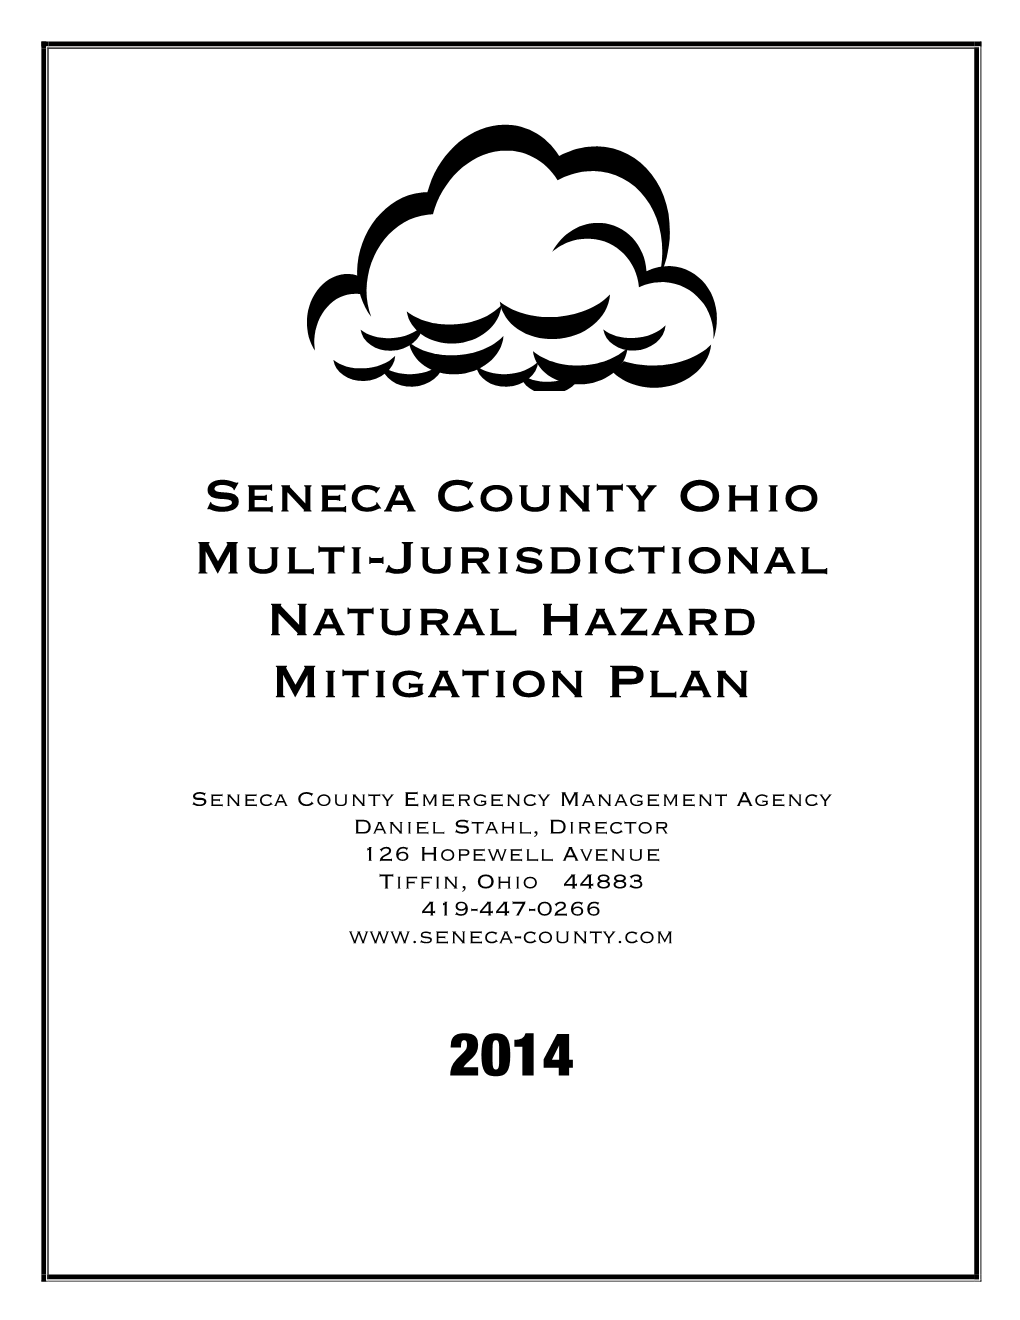 Seneca County Ohio Multi-Jurisdictional Natural Hazard Mitigation Plan